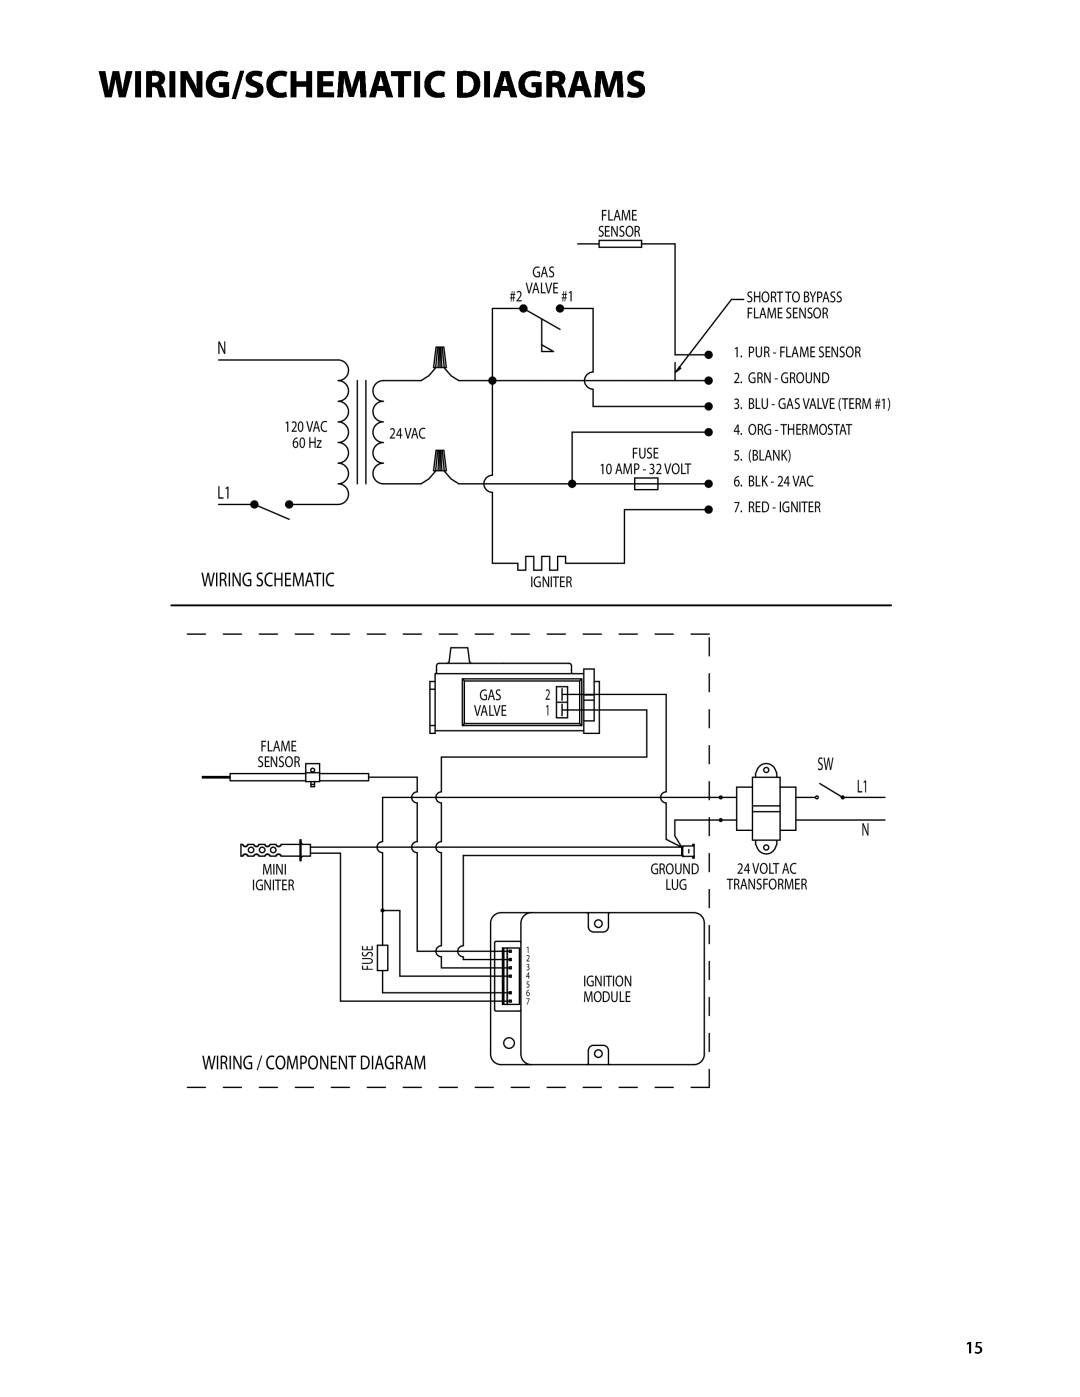 DCS DRH-48N manual Wiring/Schematic Diagrams, SW L1 N, Wiring Schematic, Wiring / Component Diagram, Fuse, Transformer 